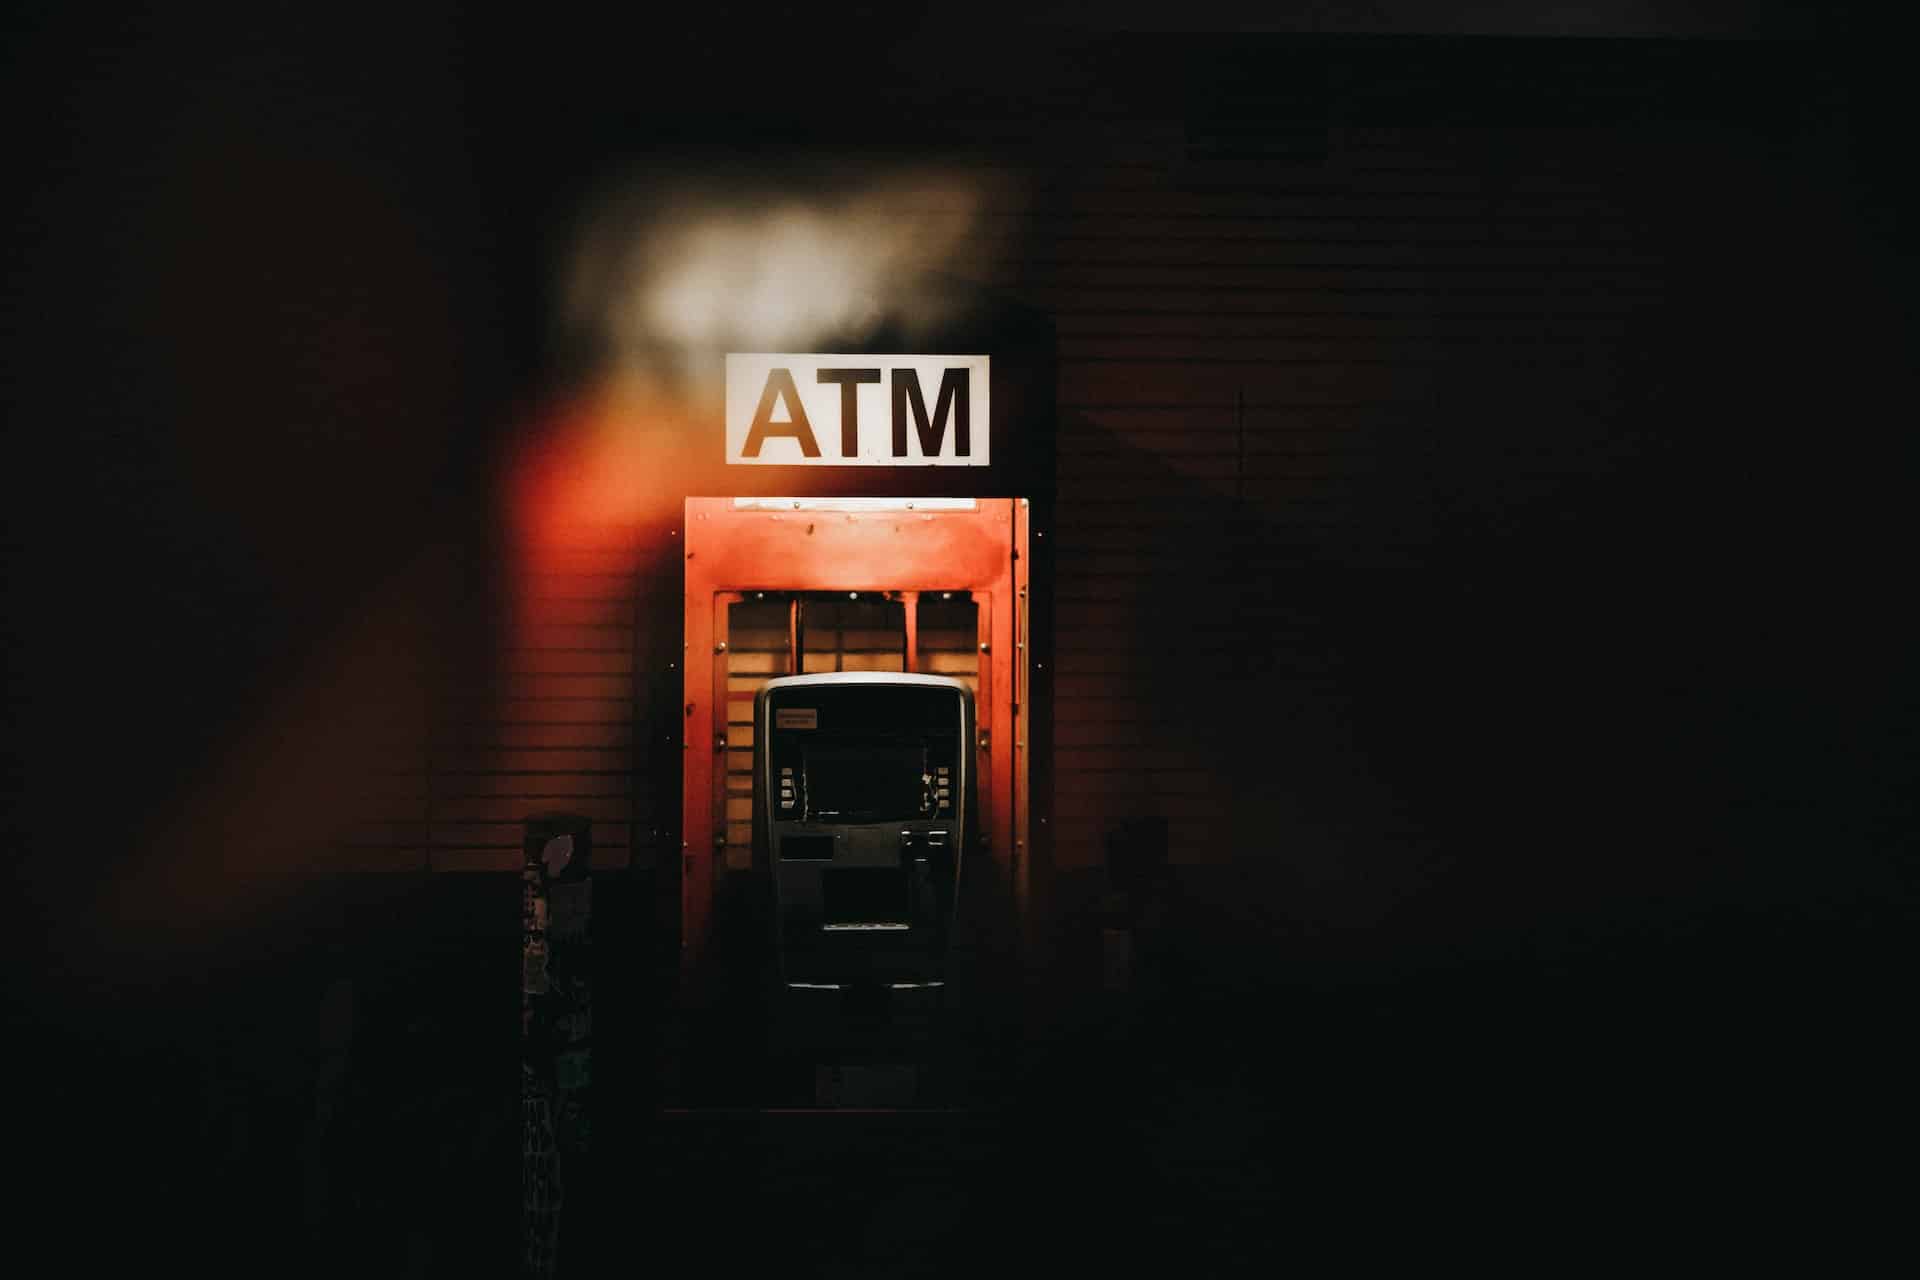 ATM machine at night